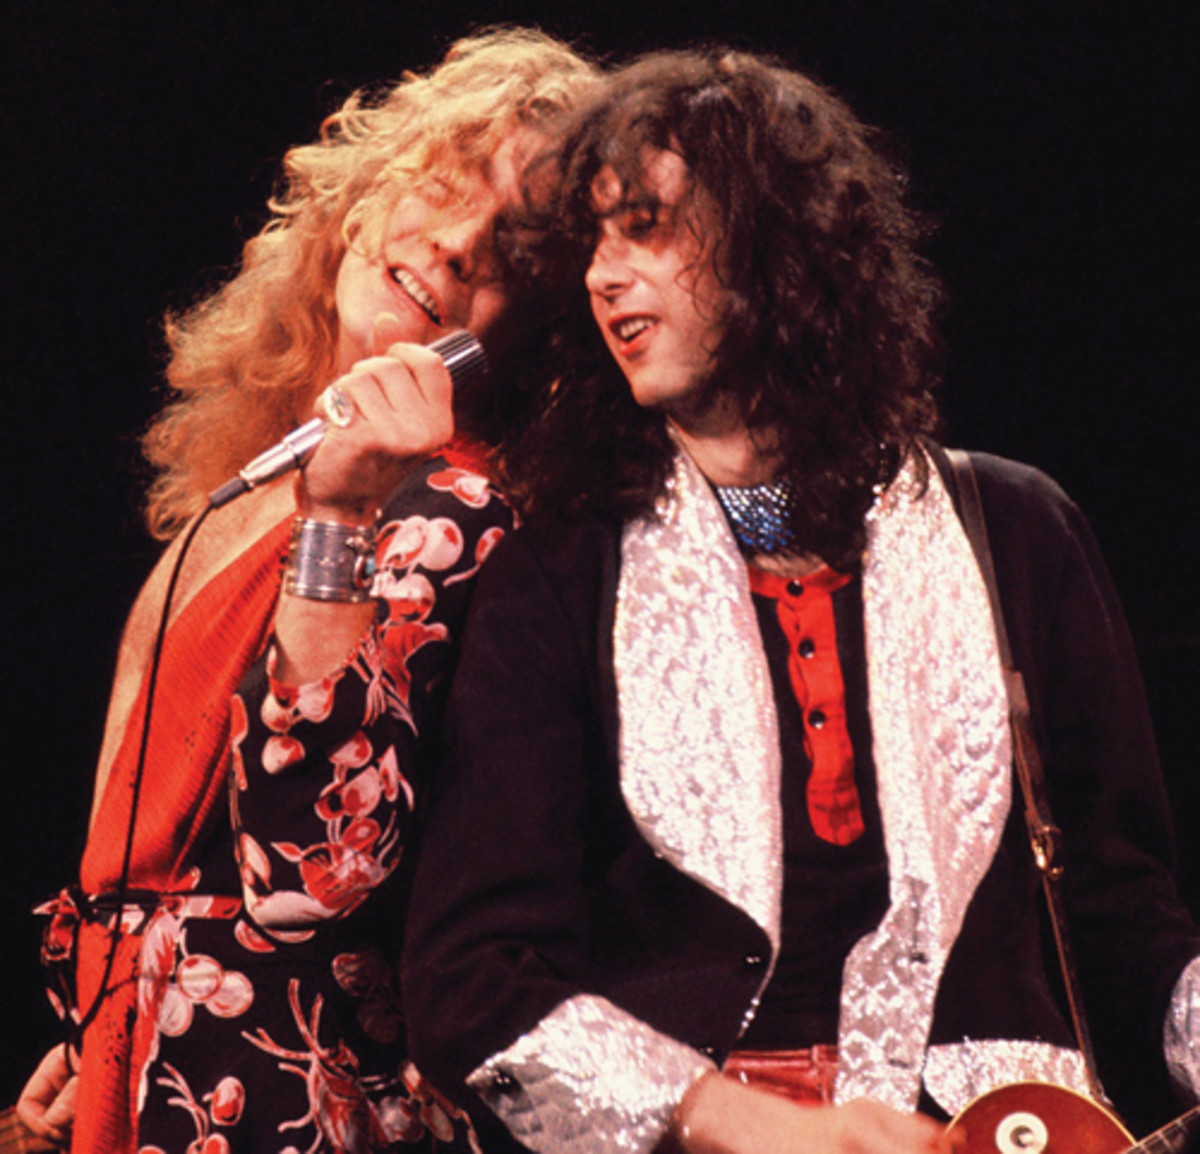 Robert Plant and Jimmy Page. Photo courtesy Richard Kwasniewski/Frank White Photo Agency 